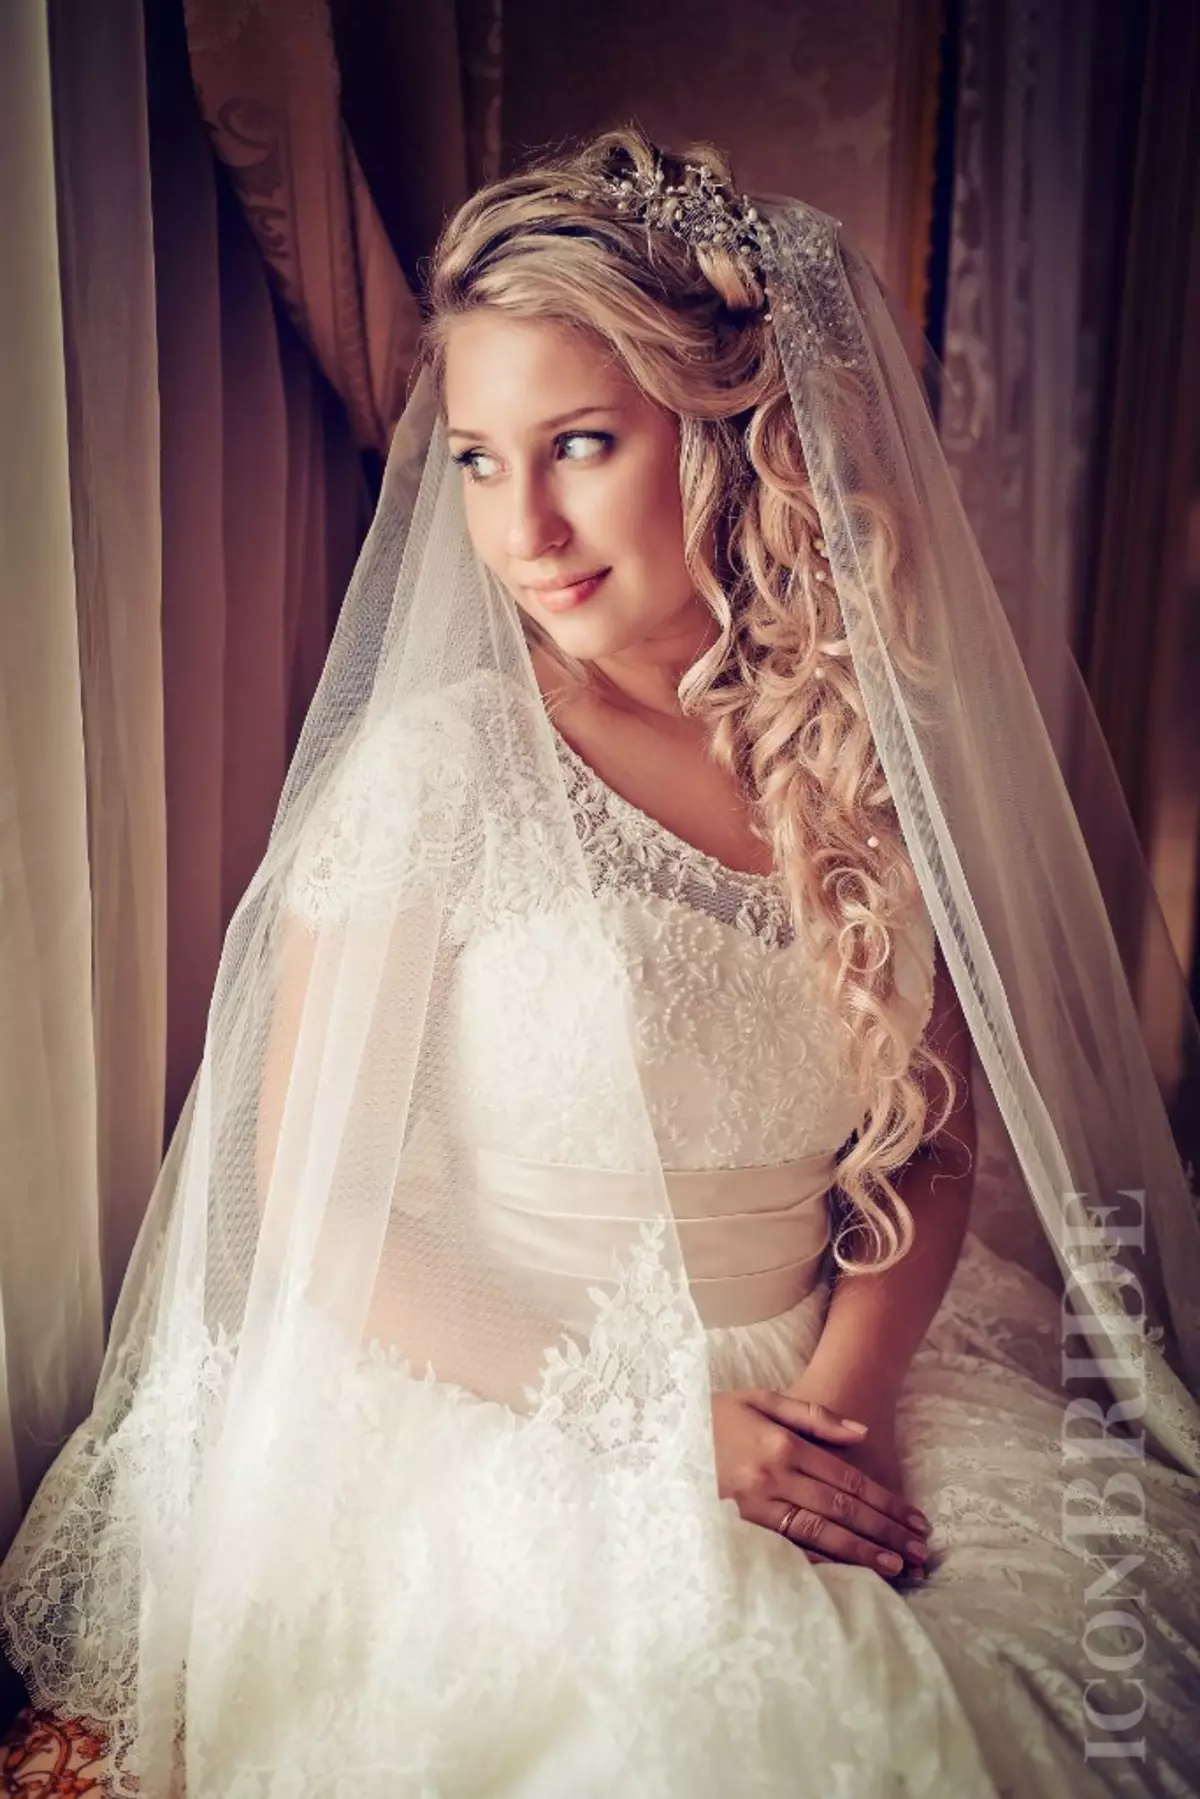 Hairstyles γάμου με πέπλα για μακριά μαλλιά (40 φωτογραφίες): Συνδυασμένες επιλογές για τη νύφη με το διάδημα. Πώς να βάλει μπούκλες σε ένα γάμο με ένα σύντομο βίντεο; 7971_16